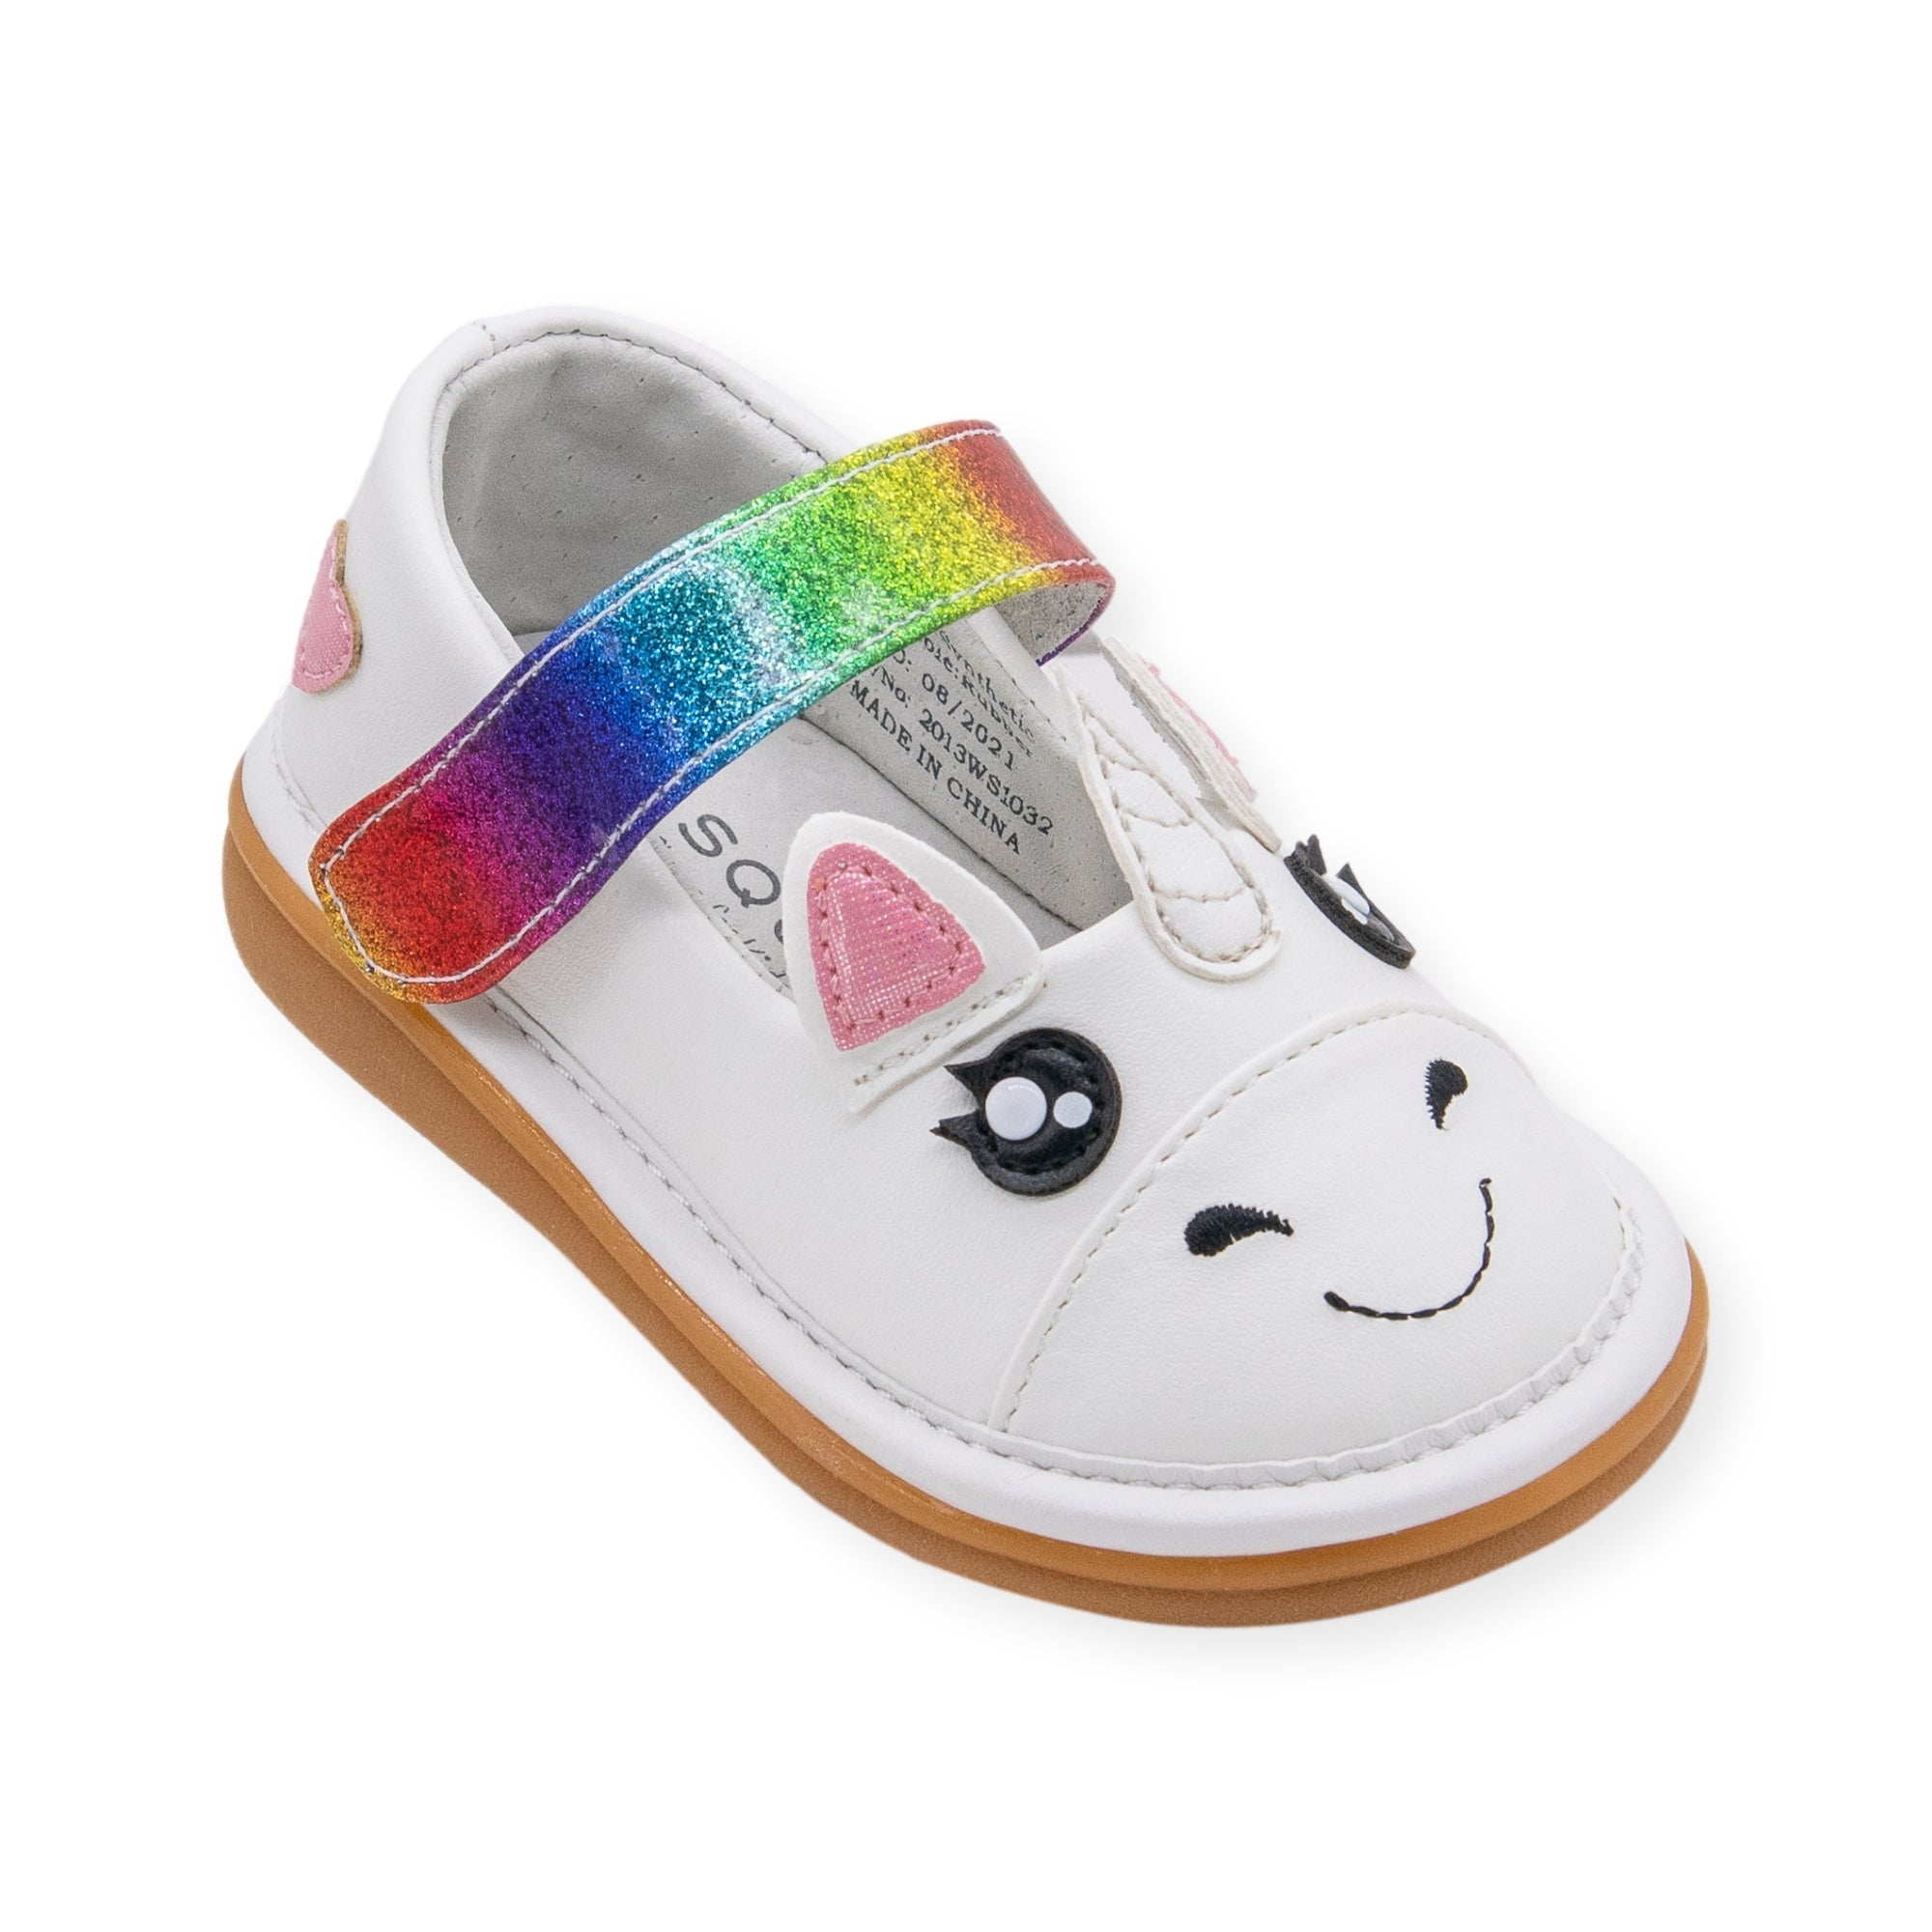 Shop Toddler Shoes